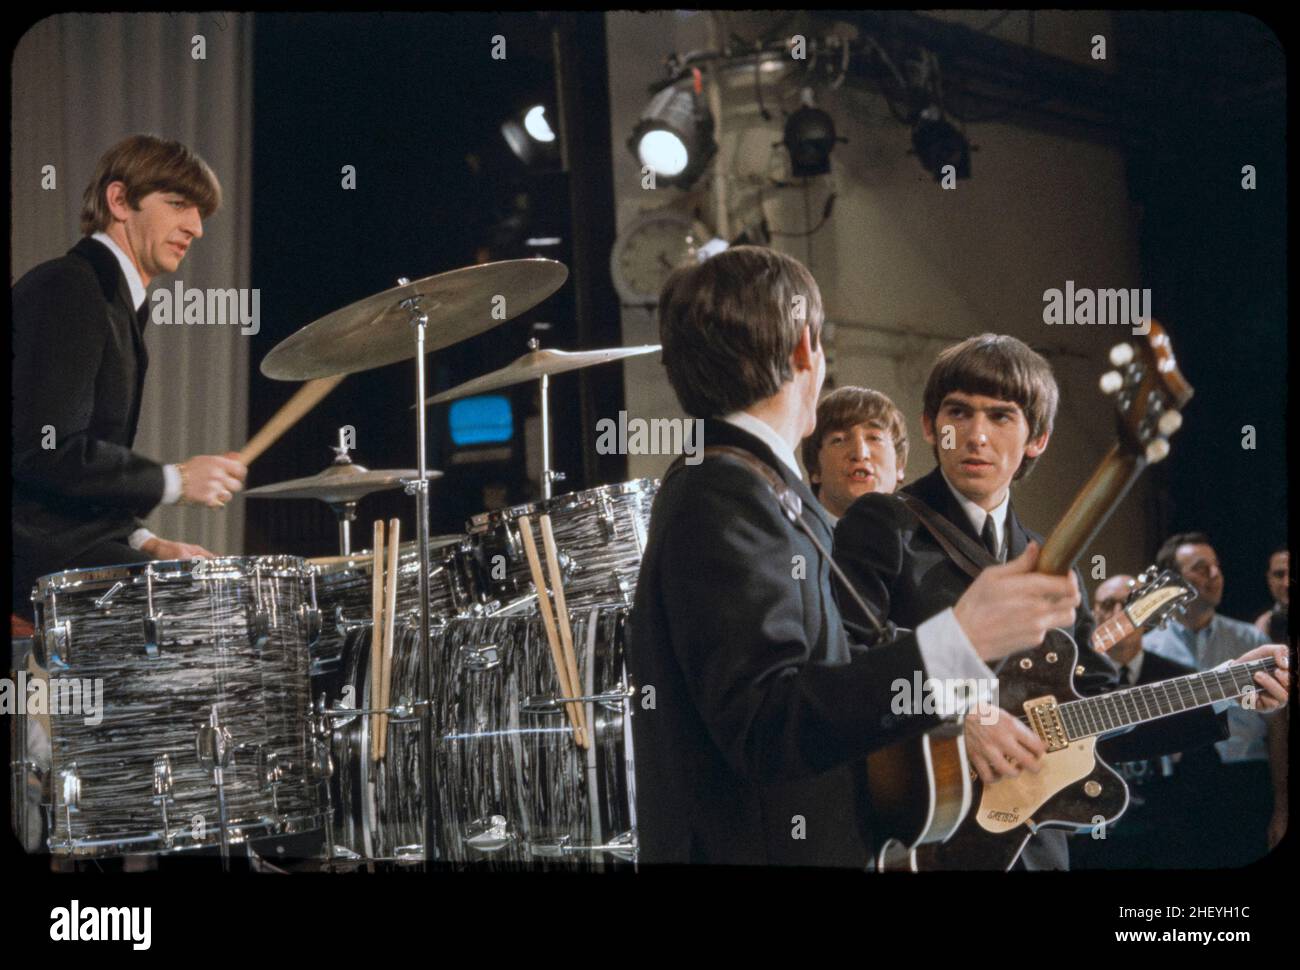 The Beatles on stage at The Ed Sullivan Show, New York. 1964. Gotfryd, Bernard, photographer. Stock Photo